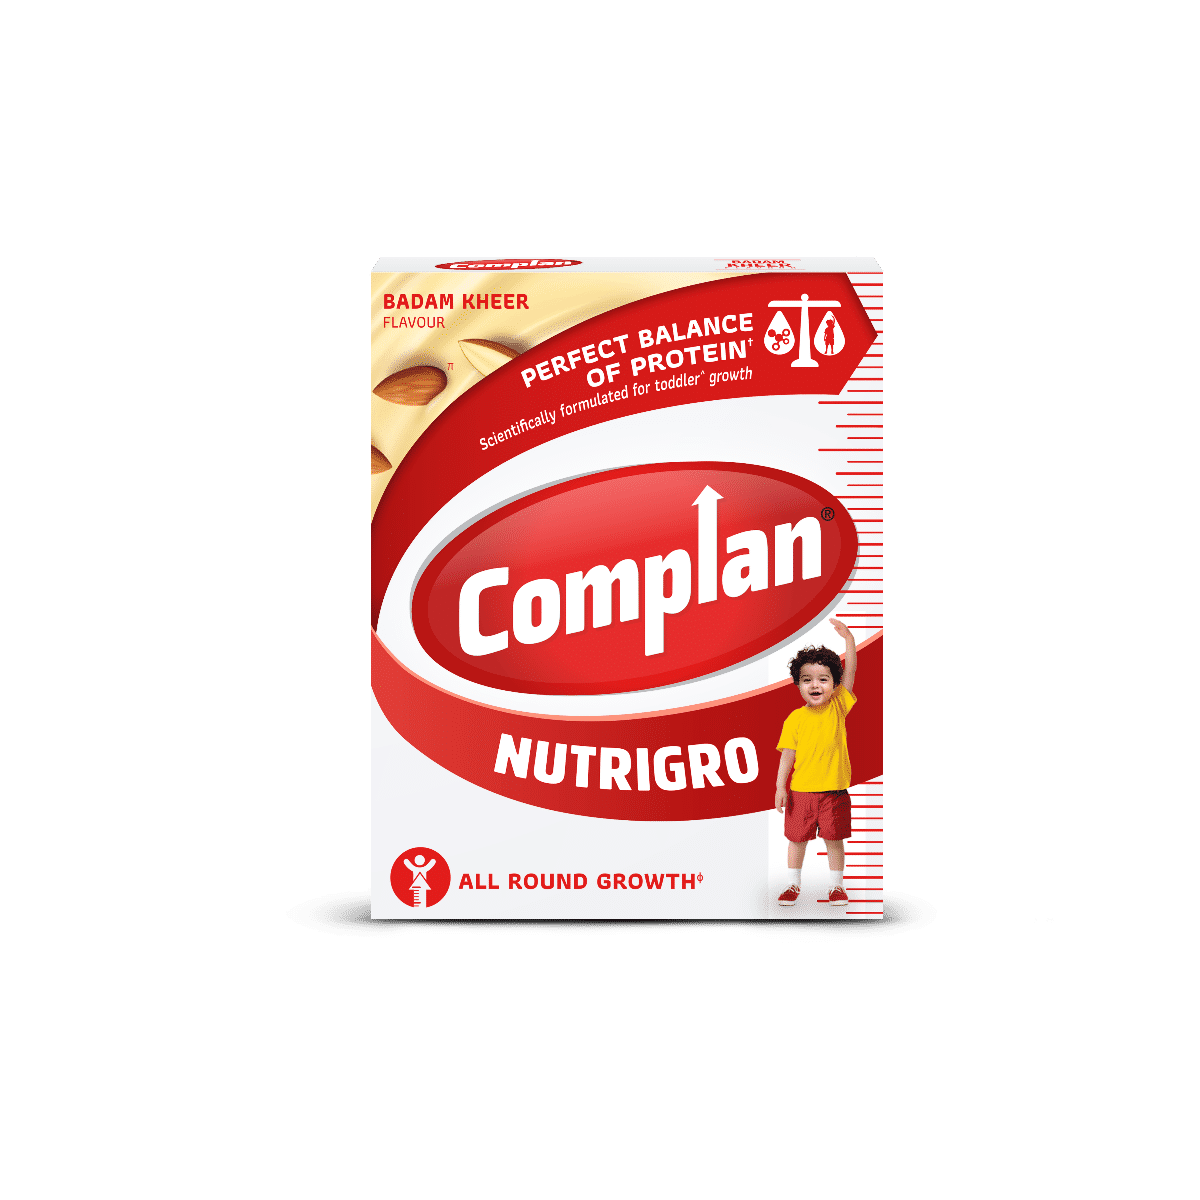 Buy Complan Nutrigro Badam Kheer Flavoured Health & Nutrition Drink, 200 gm Refill Pack Online